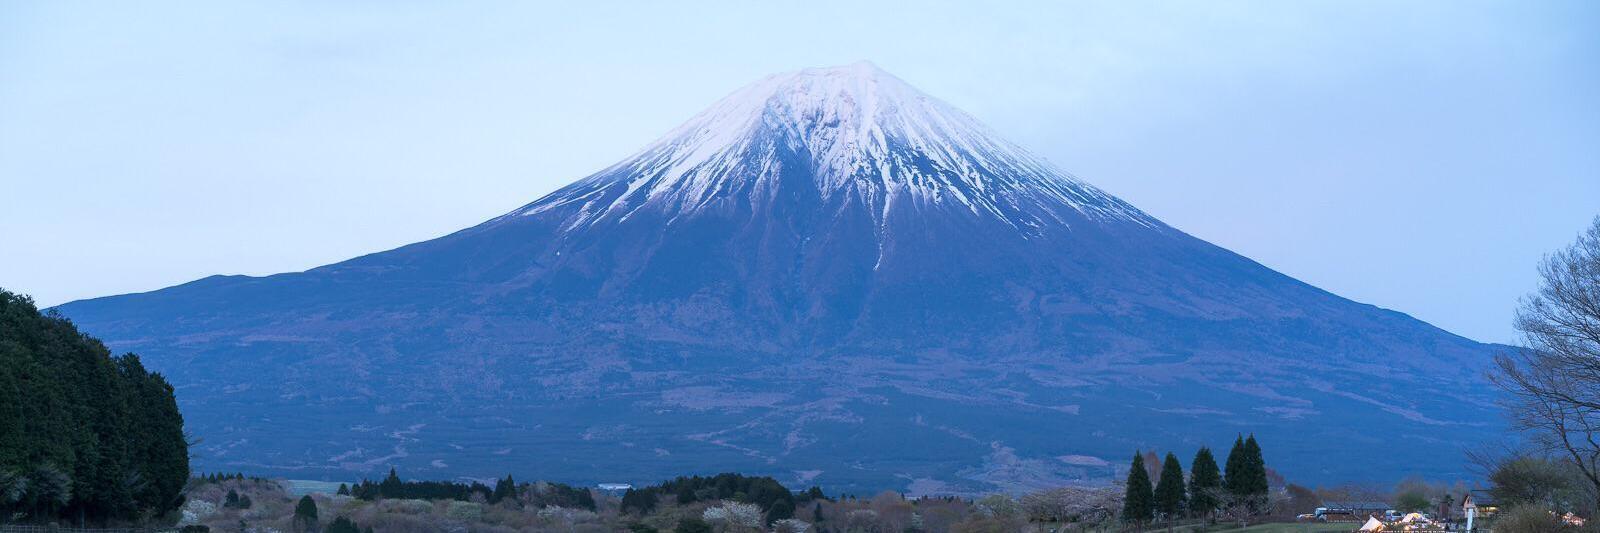 Fuji image